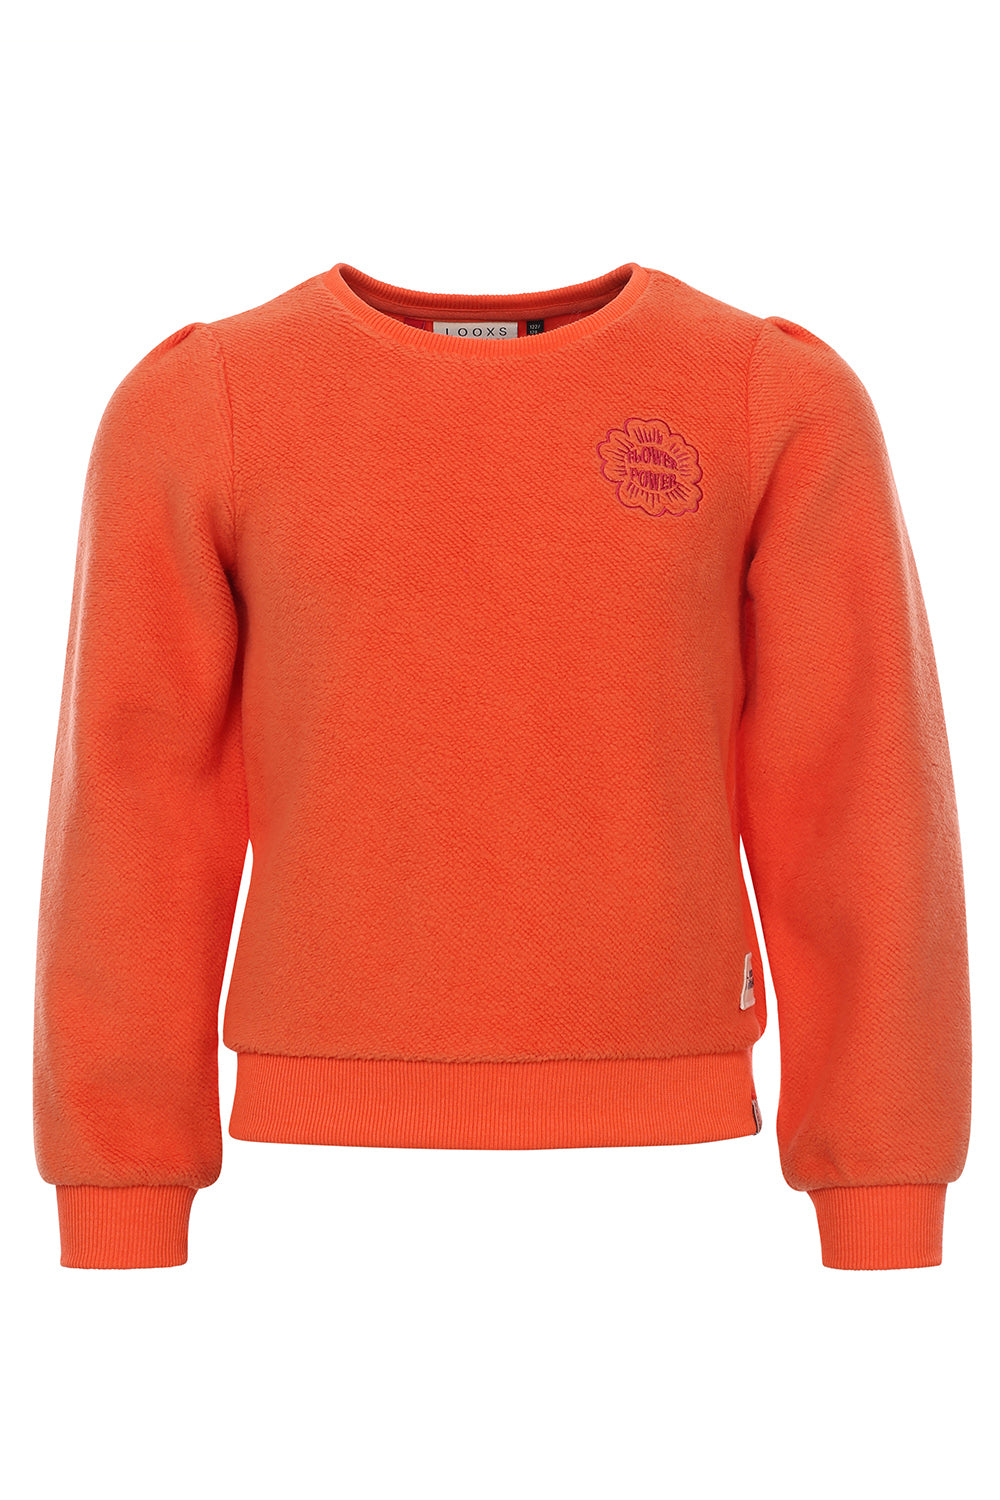 Meisjes Fleece Sweater van LOOXS Little in de kleur Fire in maat 128.